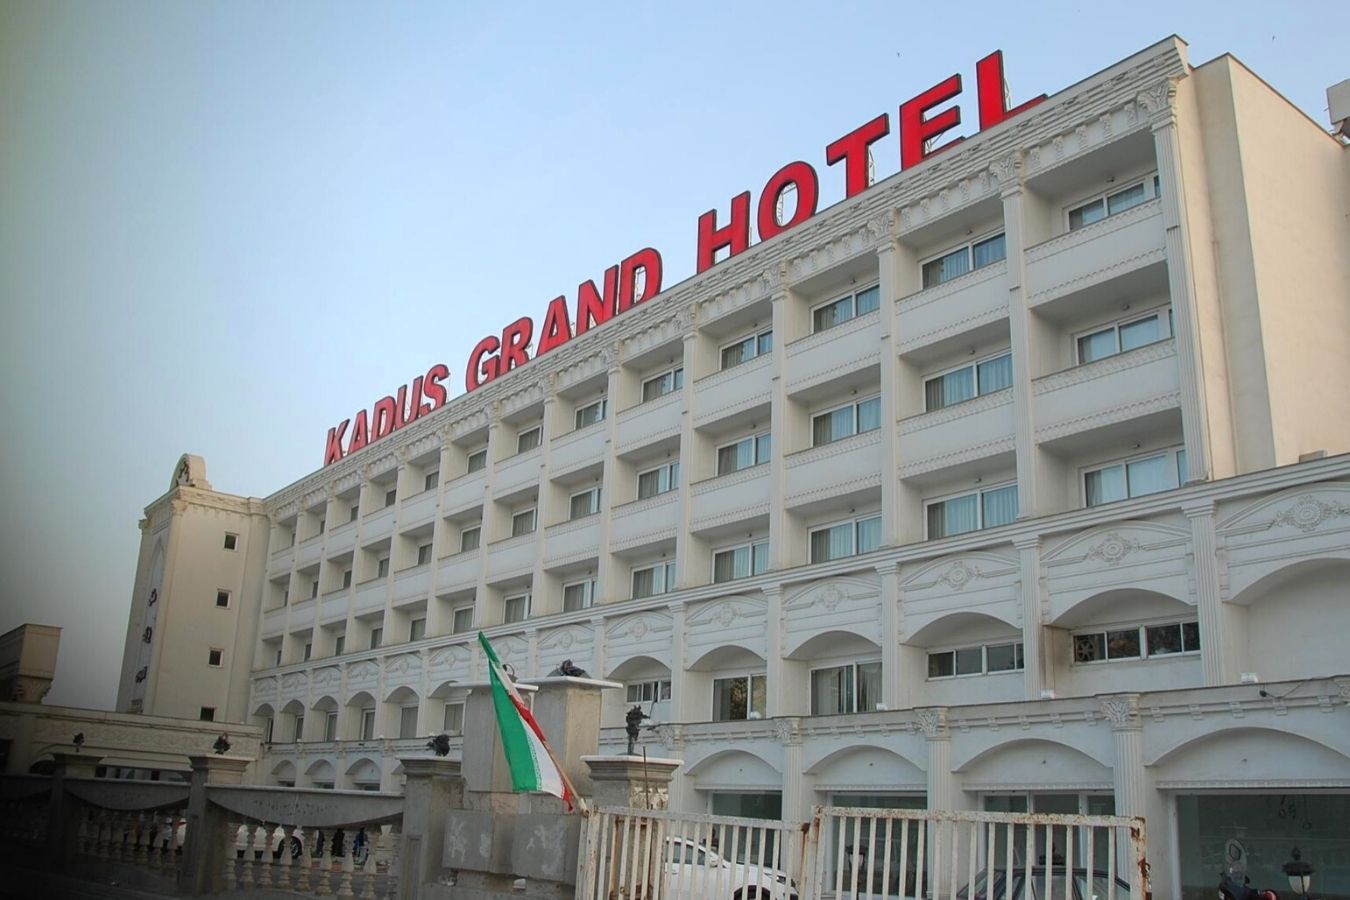 Kadus Grand Hotel